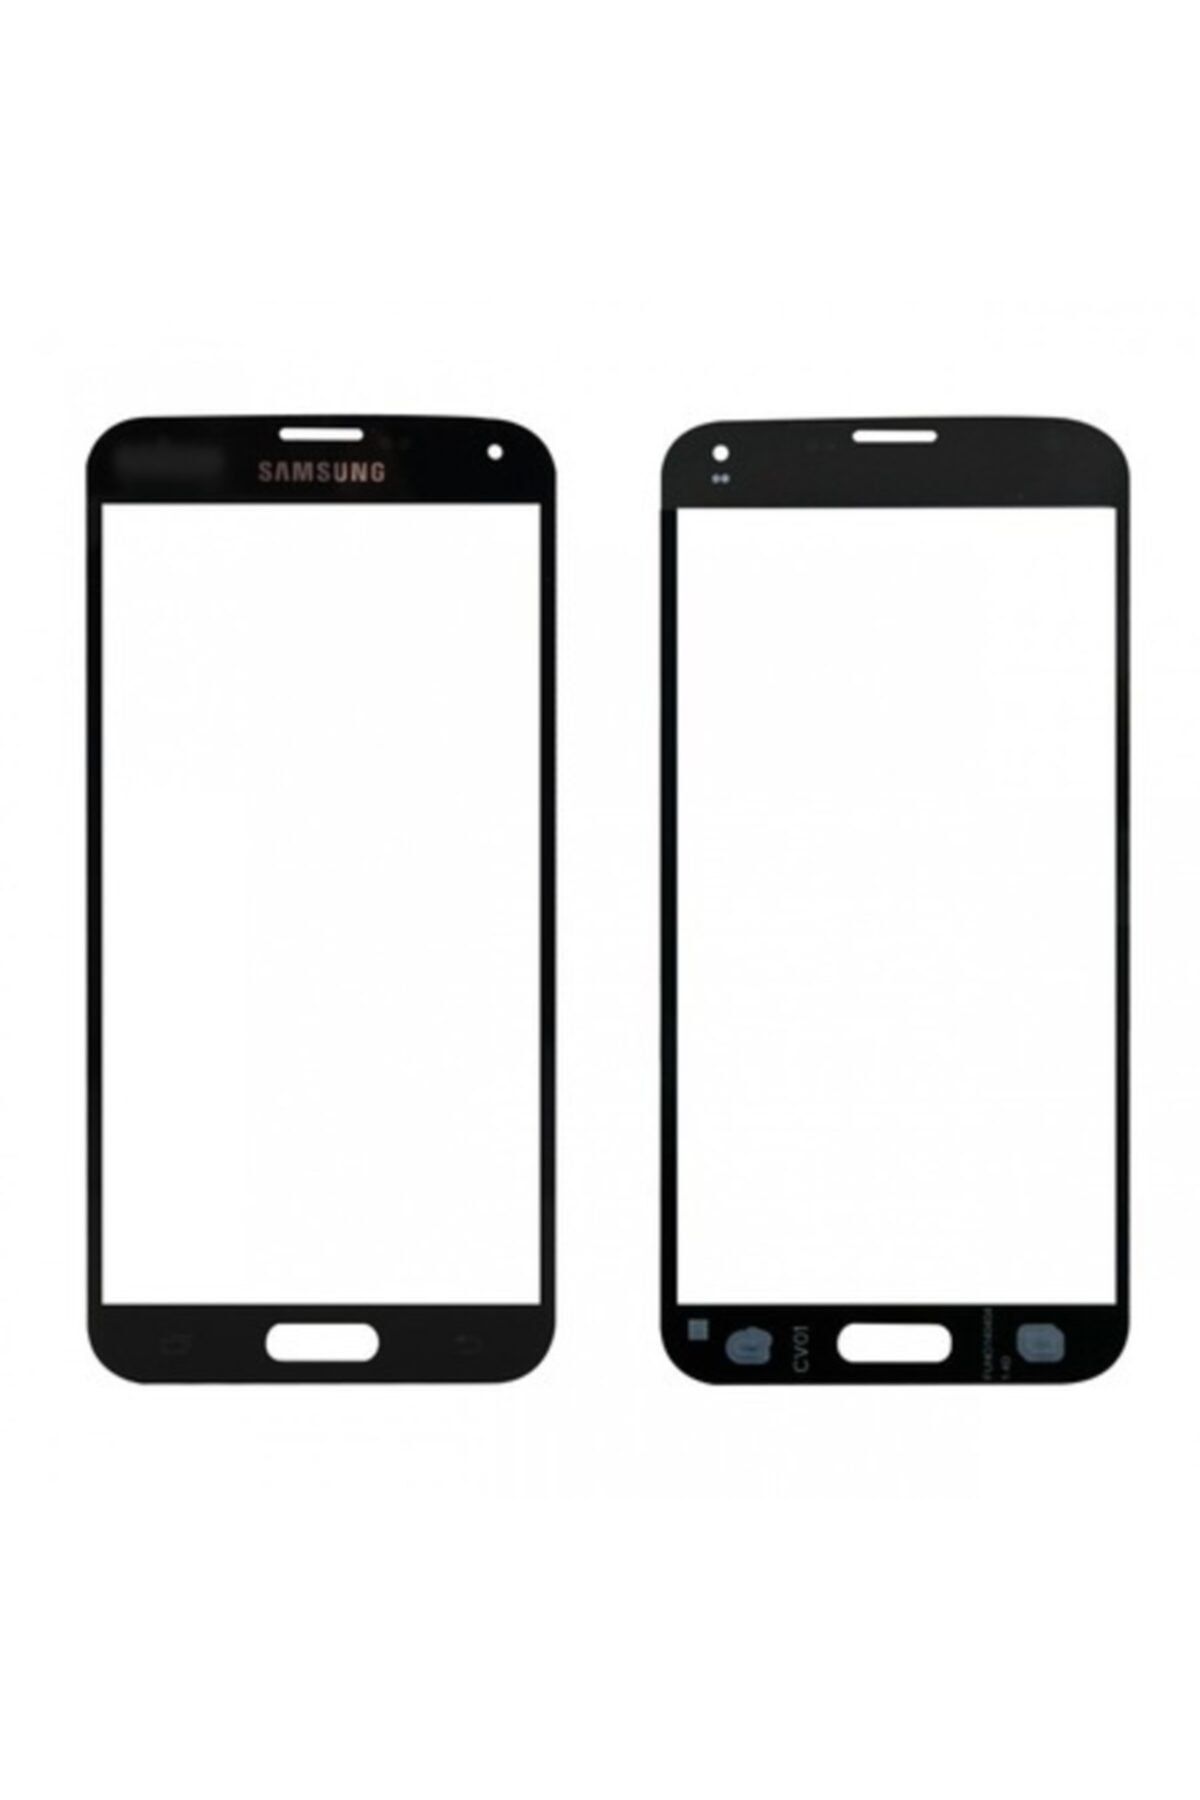 Samsung Galaxy S5 Ocalı Ön Cam Lens A+ Kalite Siyah - Black